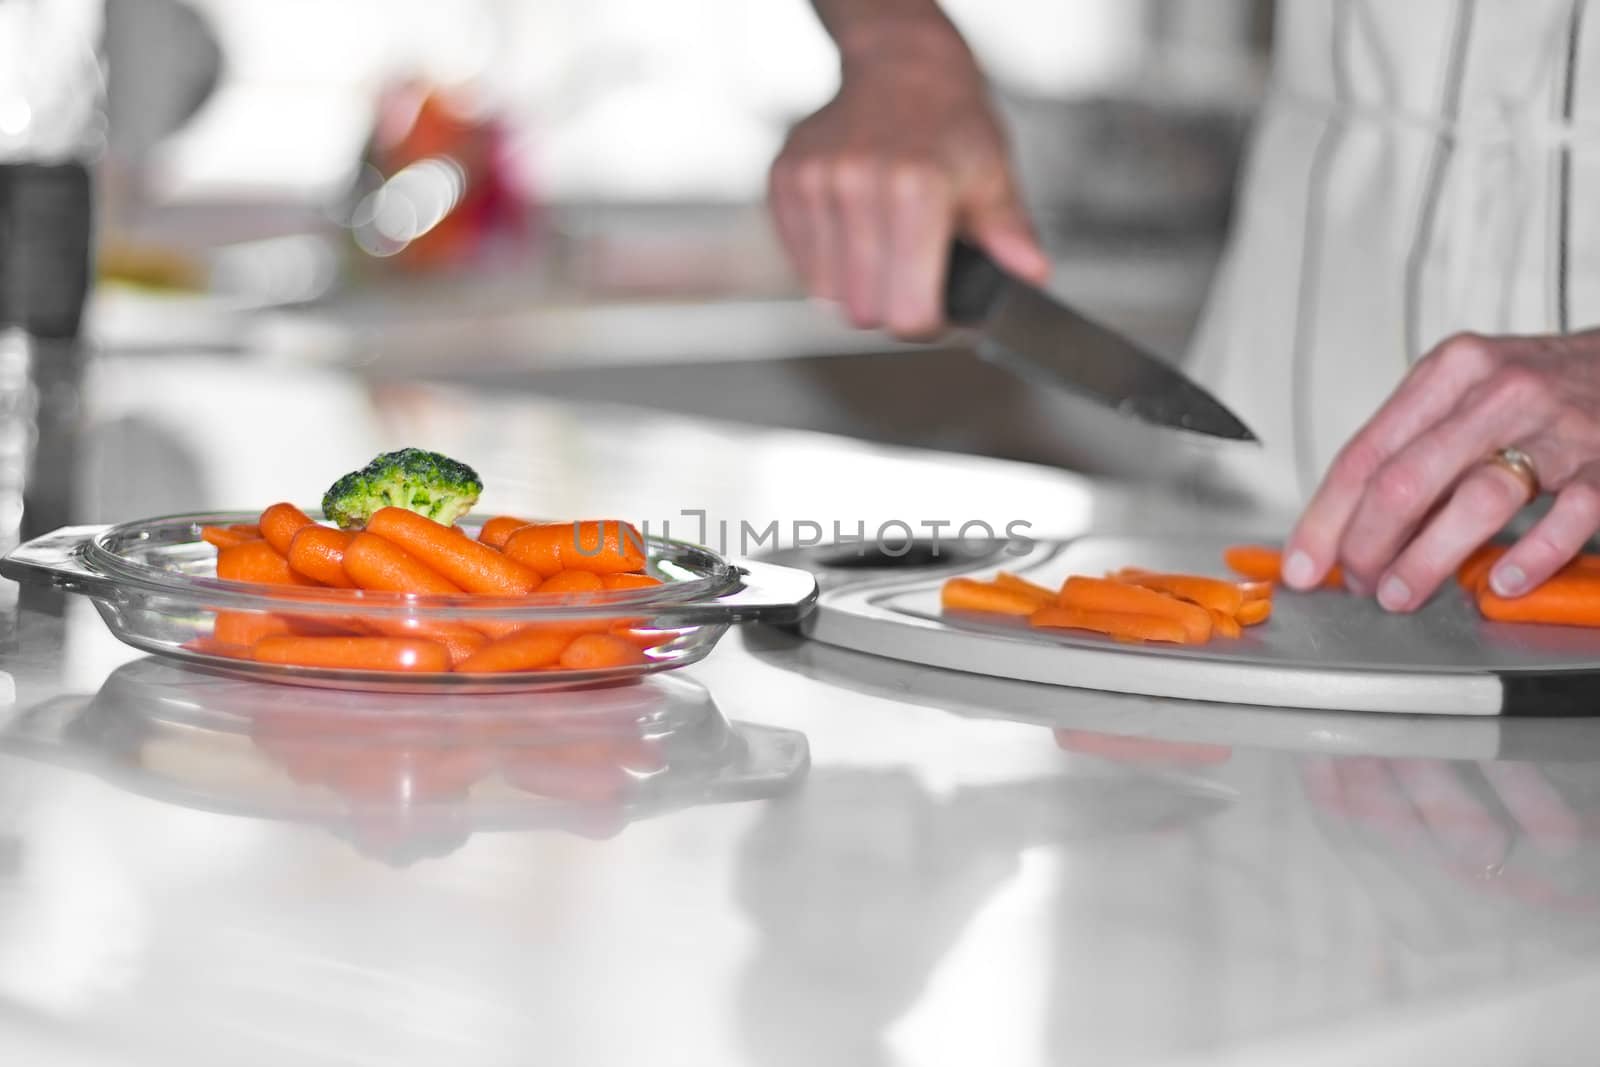 Carrot cutting in kitchen by GunterNezhoda